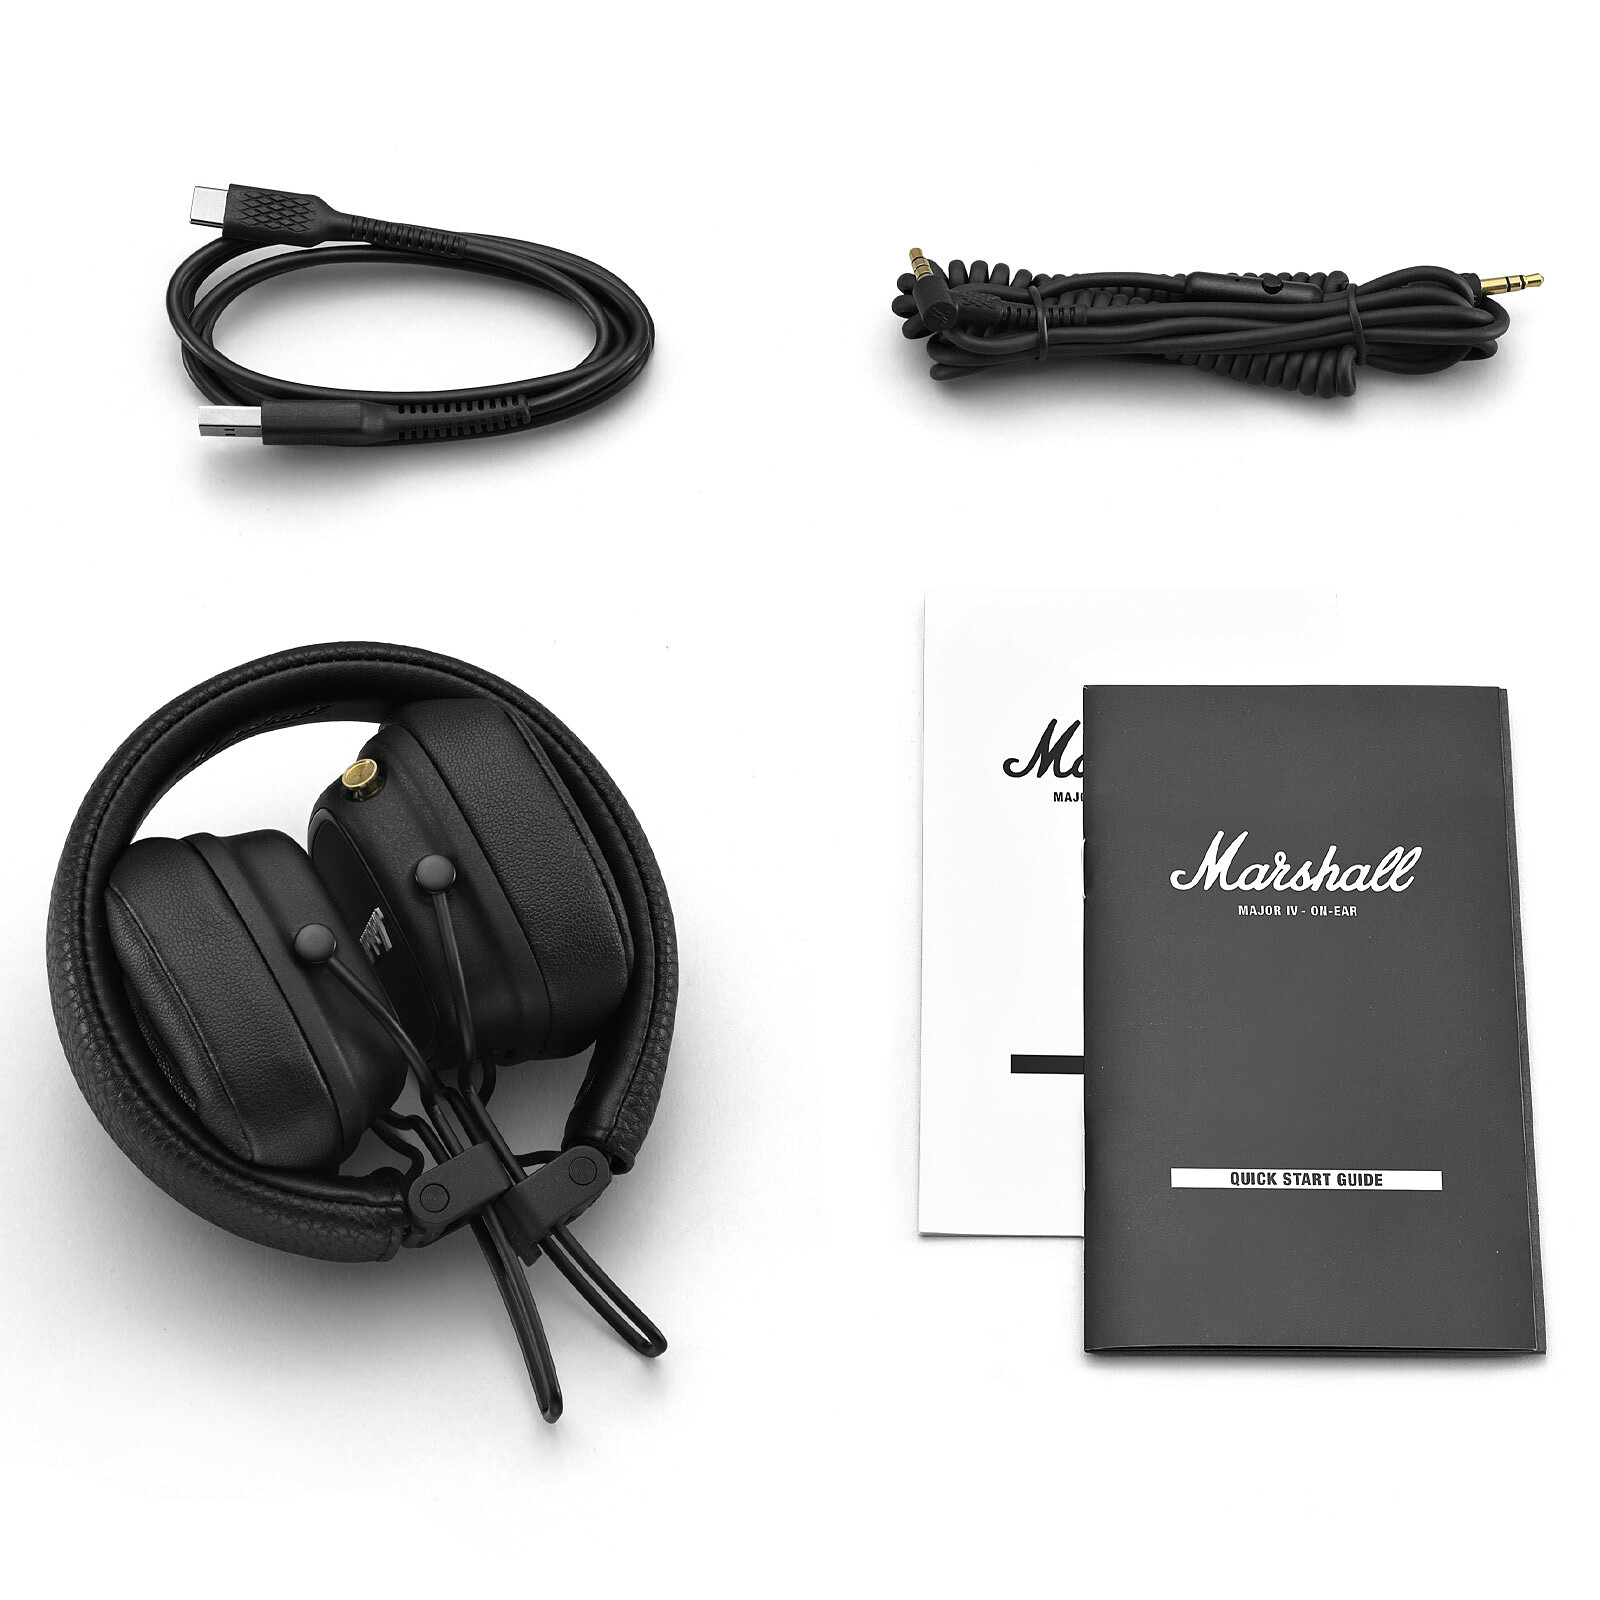 Marshall Major IV - Auriculares Bluetooth - 80 horas batería - Negro